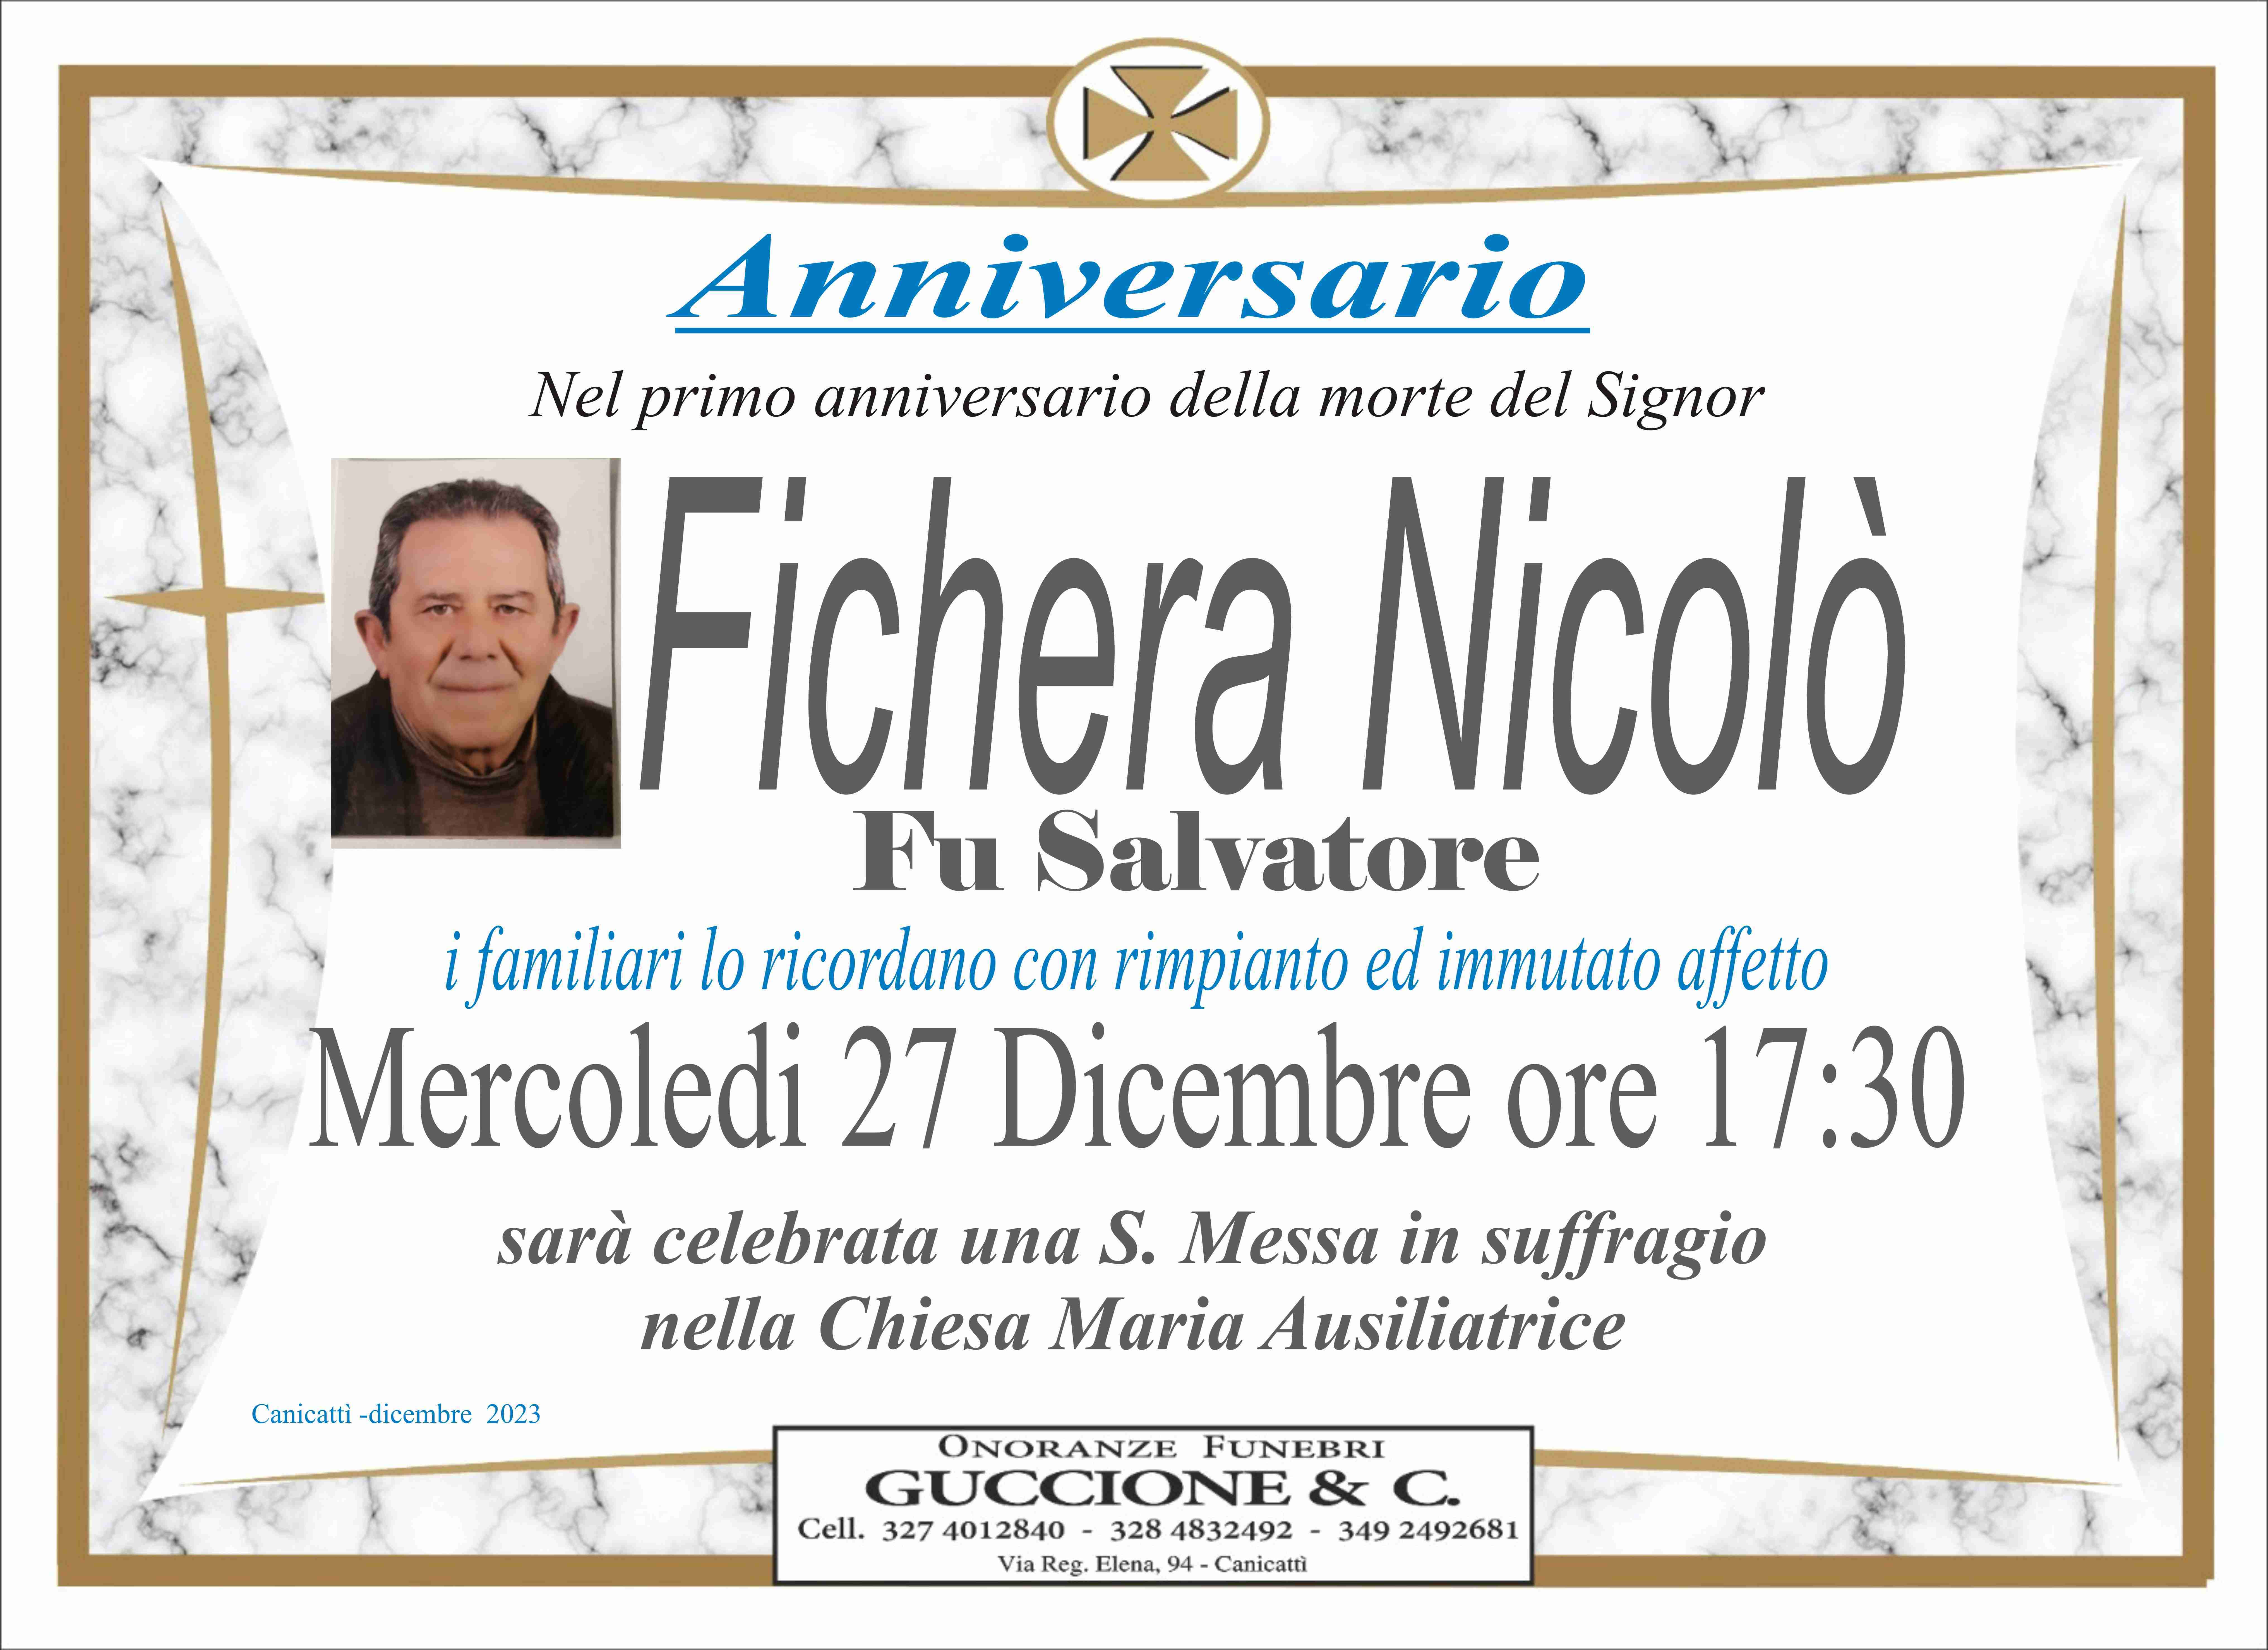 Nicolò Fichera